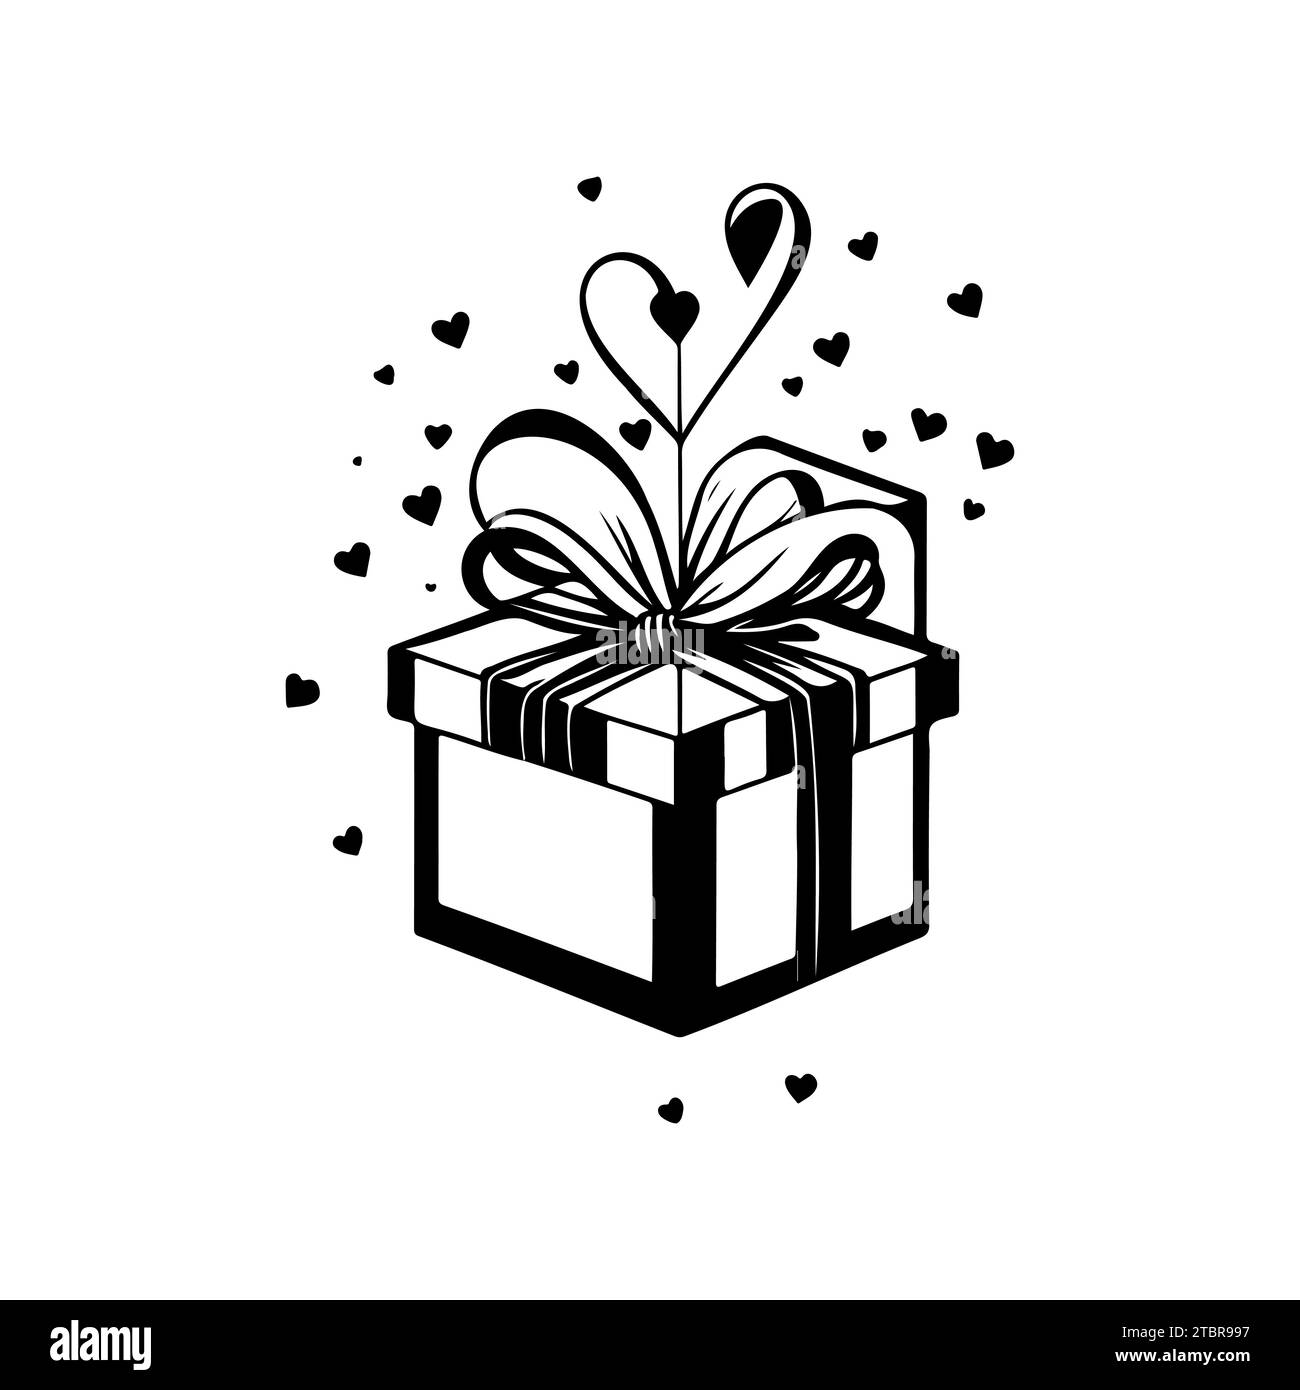 https://c8.alamy.com/comp/2TBR997/gift-box-icon-hand-draw-black-colour-valentine-day-logo-vector-element-and-symbol-2TBR997.jpg